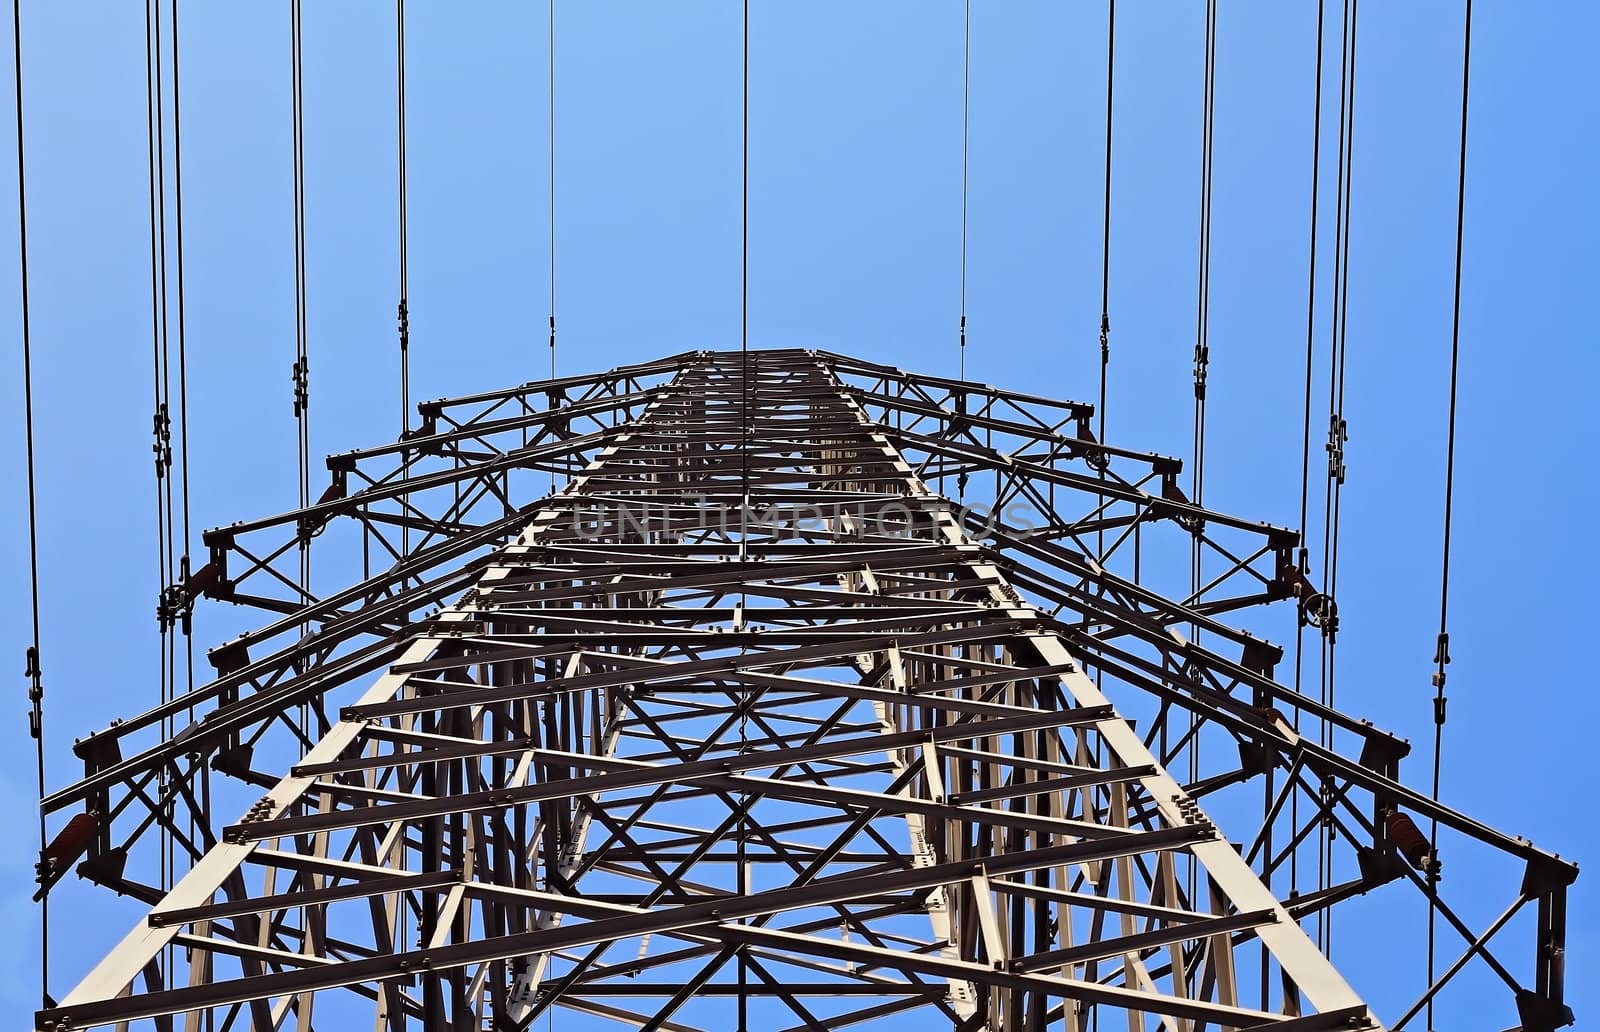 Hight voltage transmission tower by slimdragon